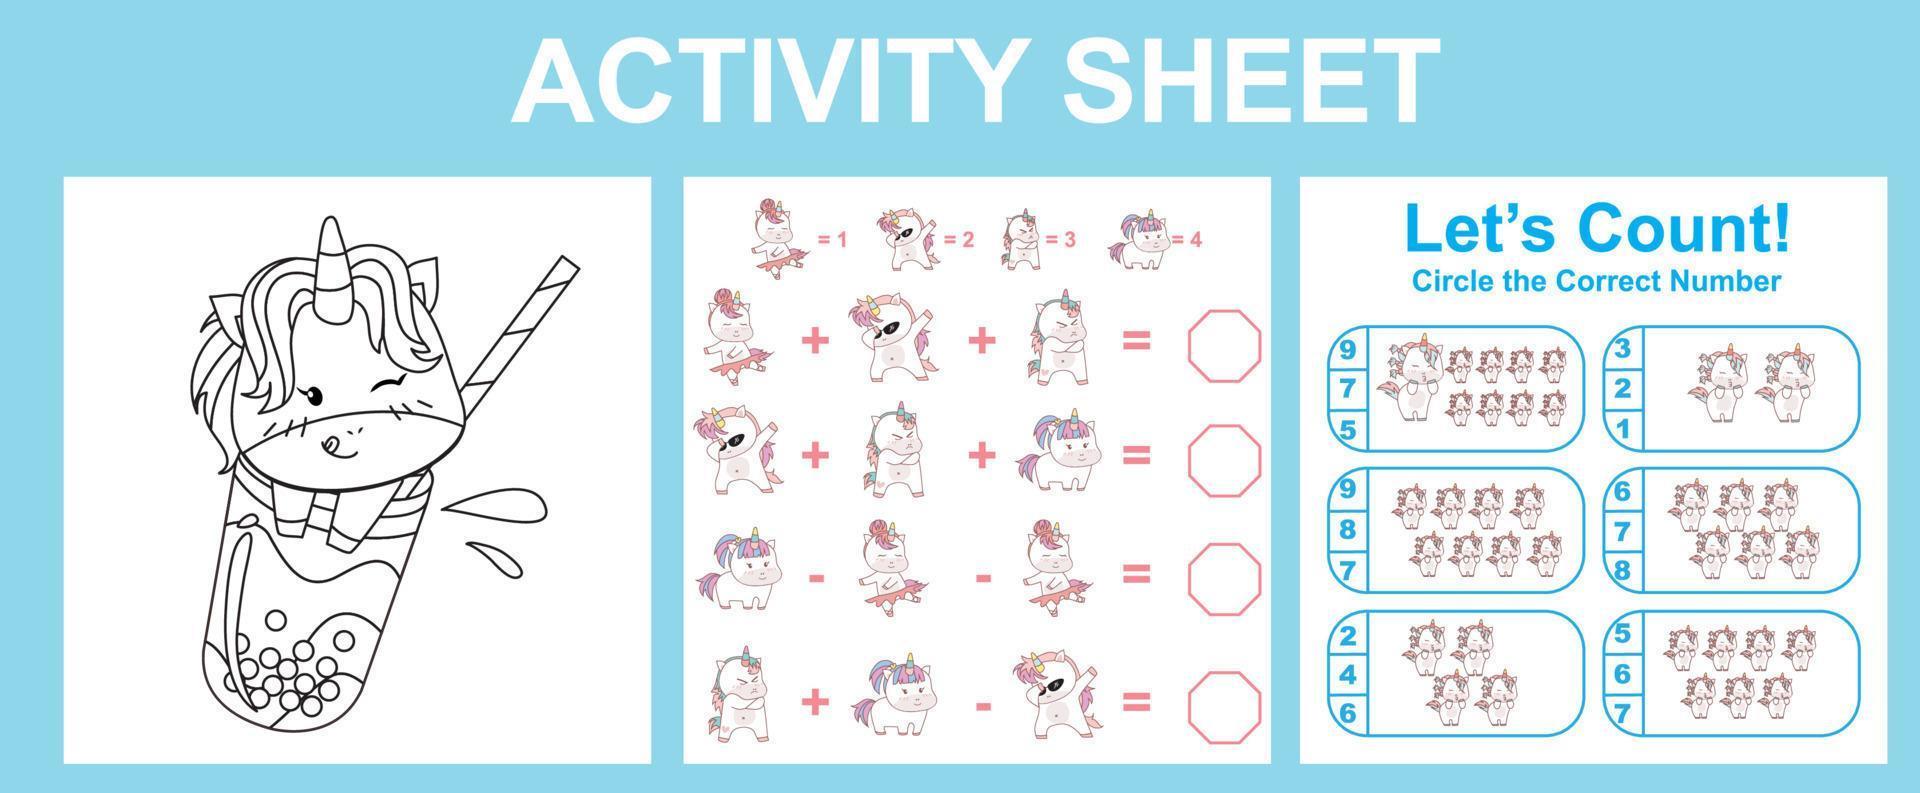 3 in 1 Activity Sheet for Children. Educational printable worksheet. vector